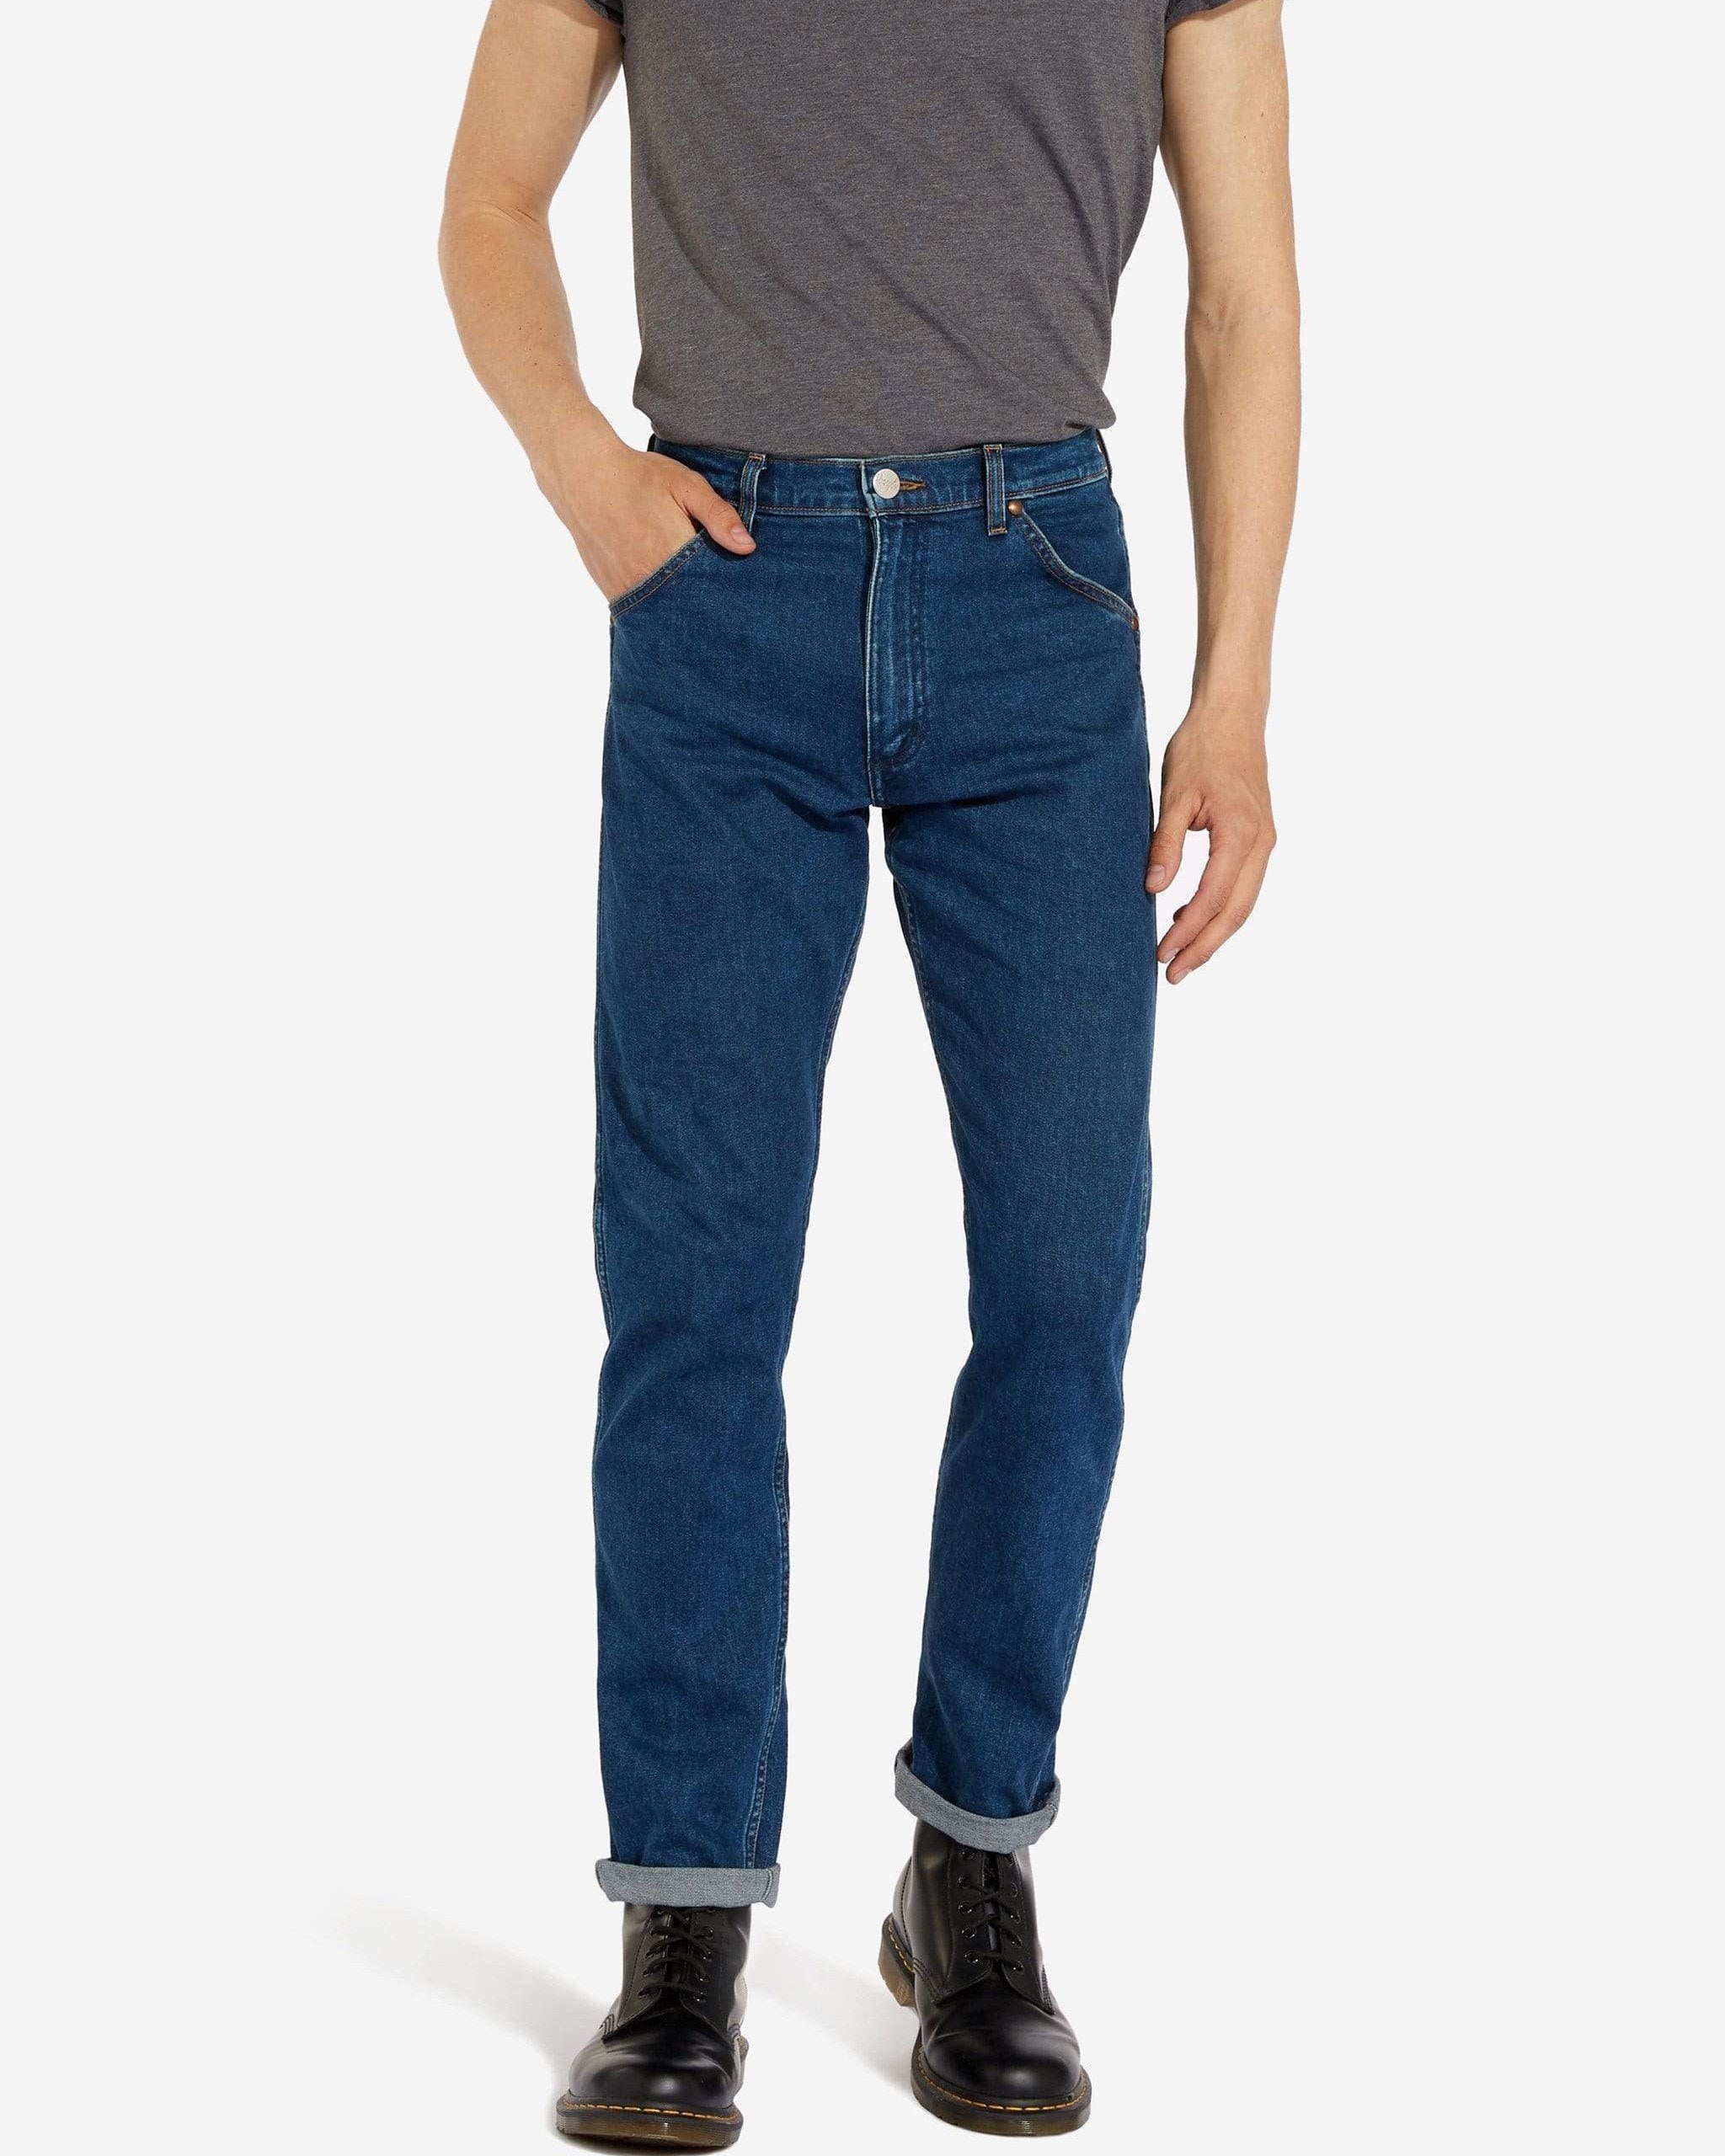 Wrangler Icons 11MWZ Western Slim Mens Jeans - 6 Months